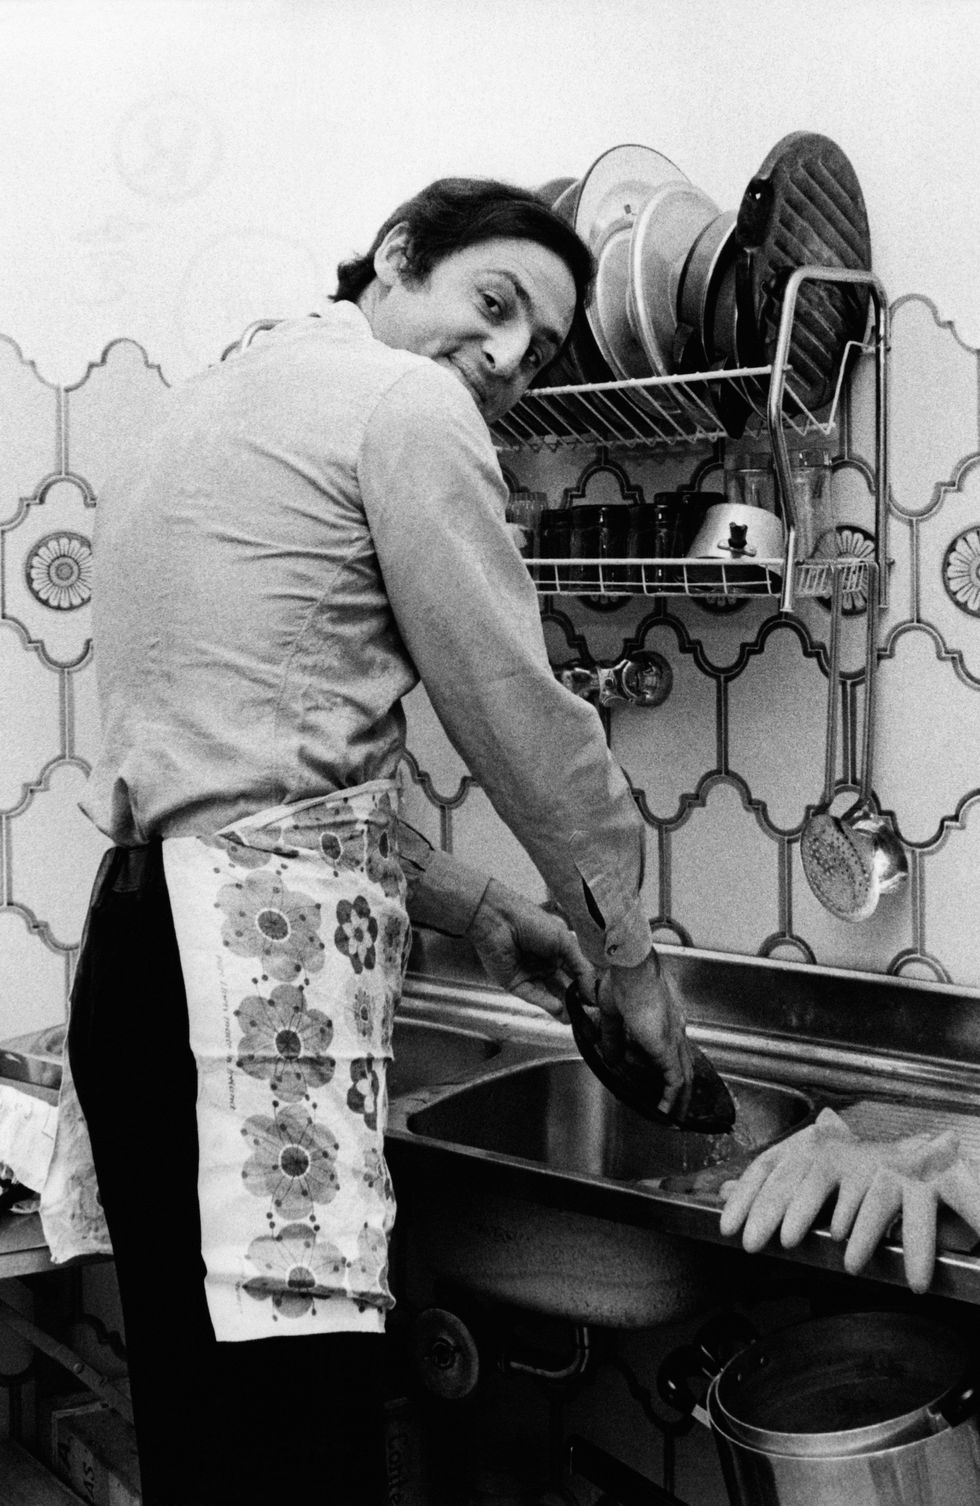 Renzo Arbore washing dishes